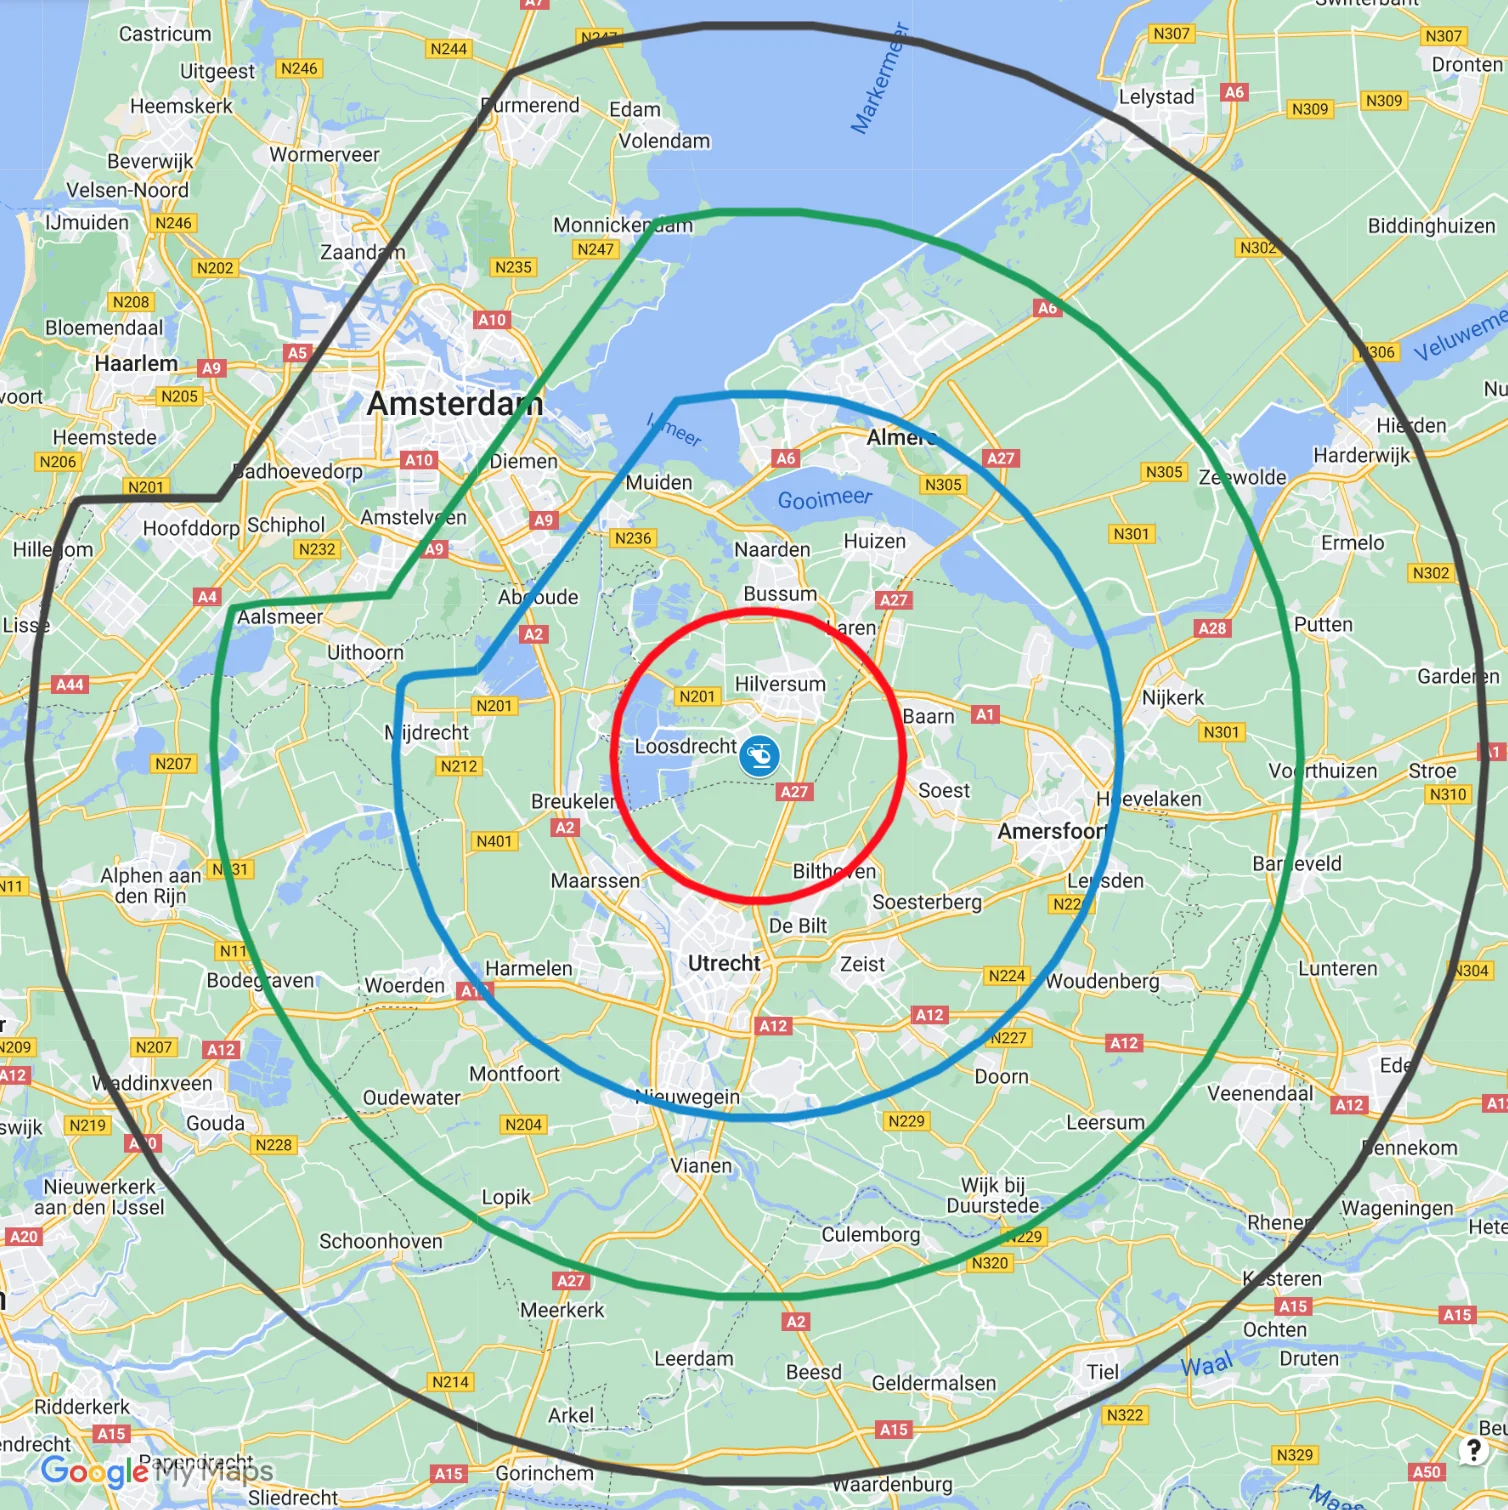 Kaart vliegtijden vliegveld Hilversum